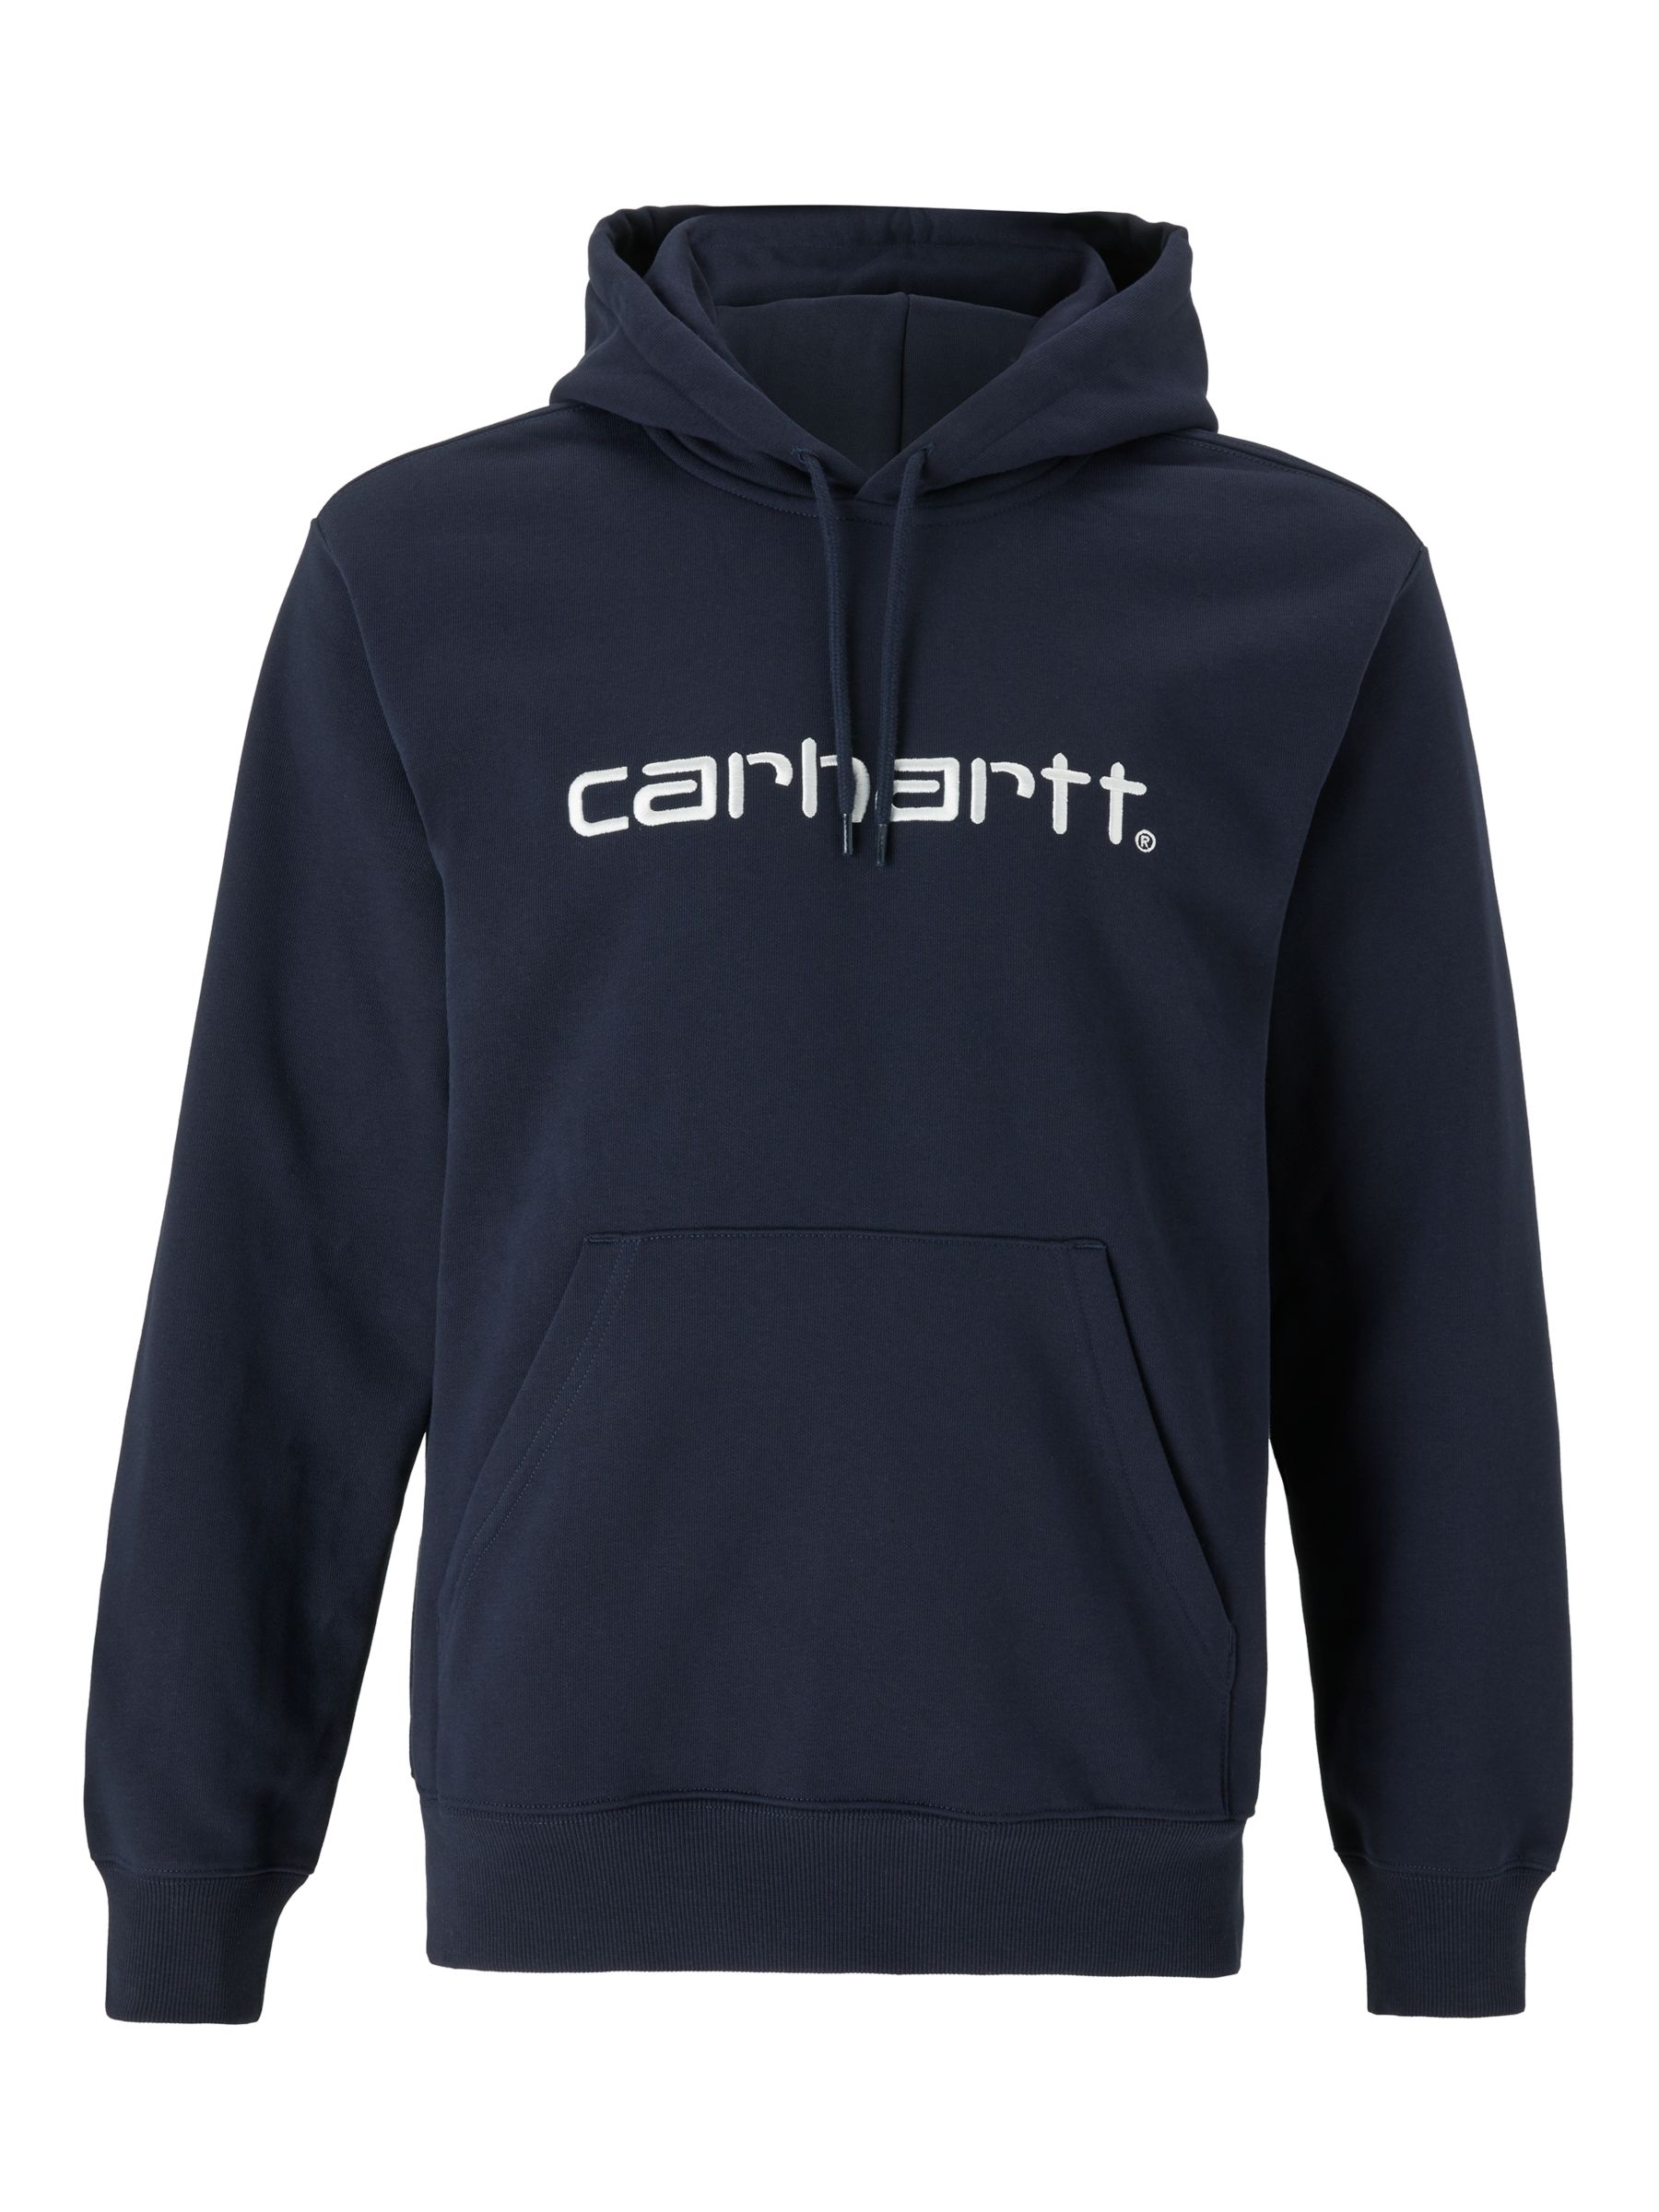 Carhartt WIP Hooded College Sweatshirt, Dark Navy/White